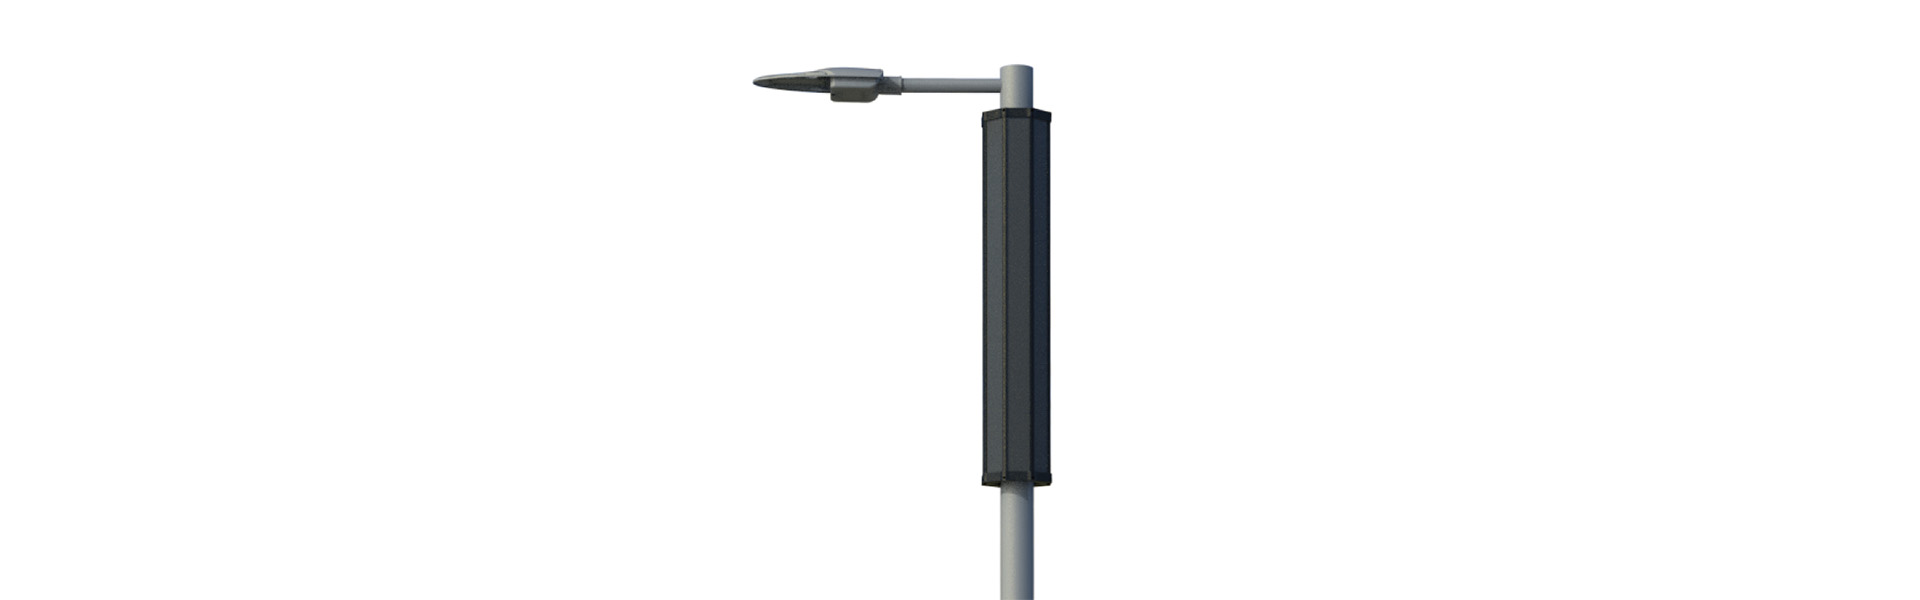 Solar-pole-light-specifications